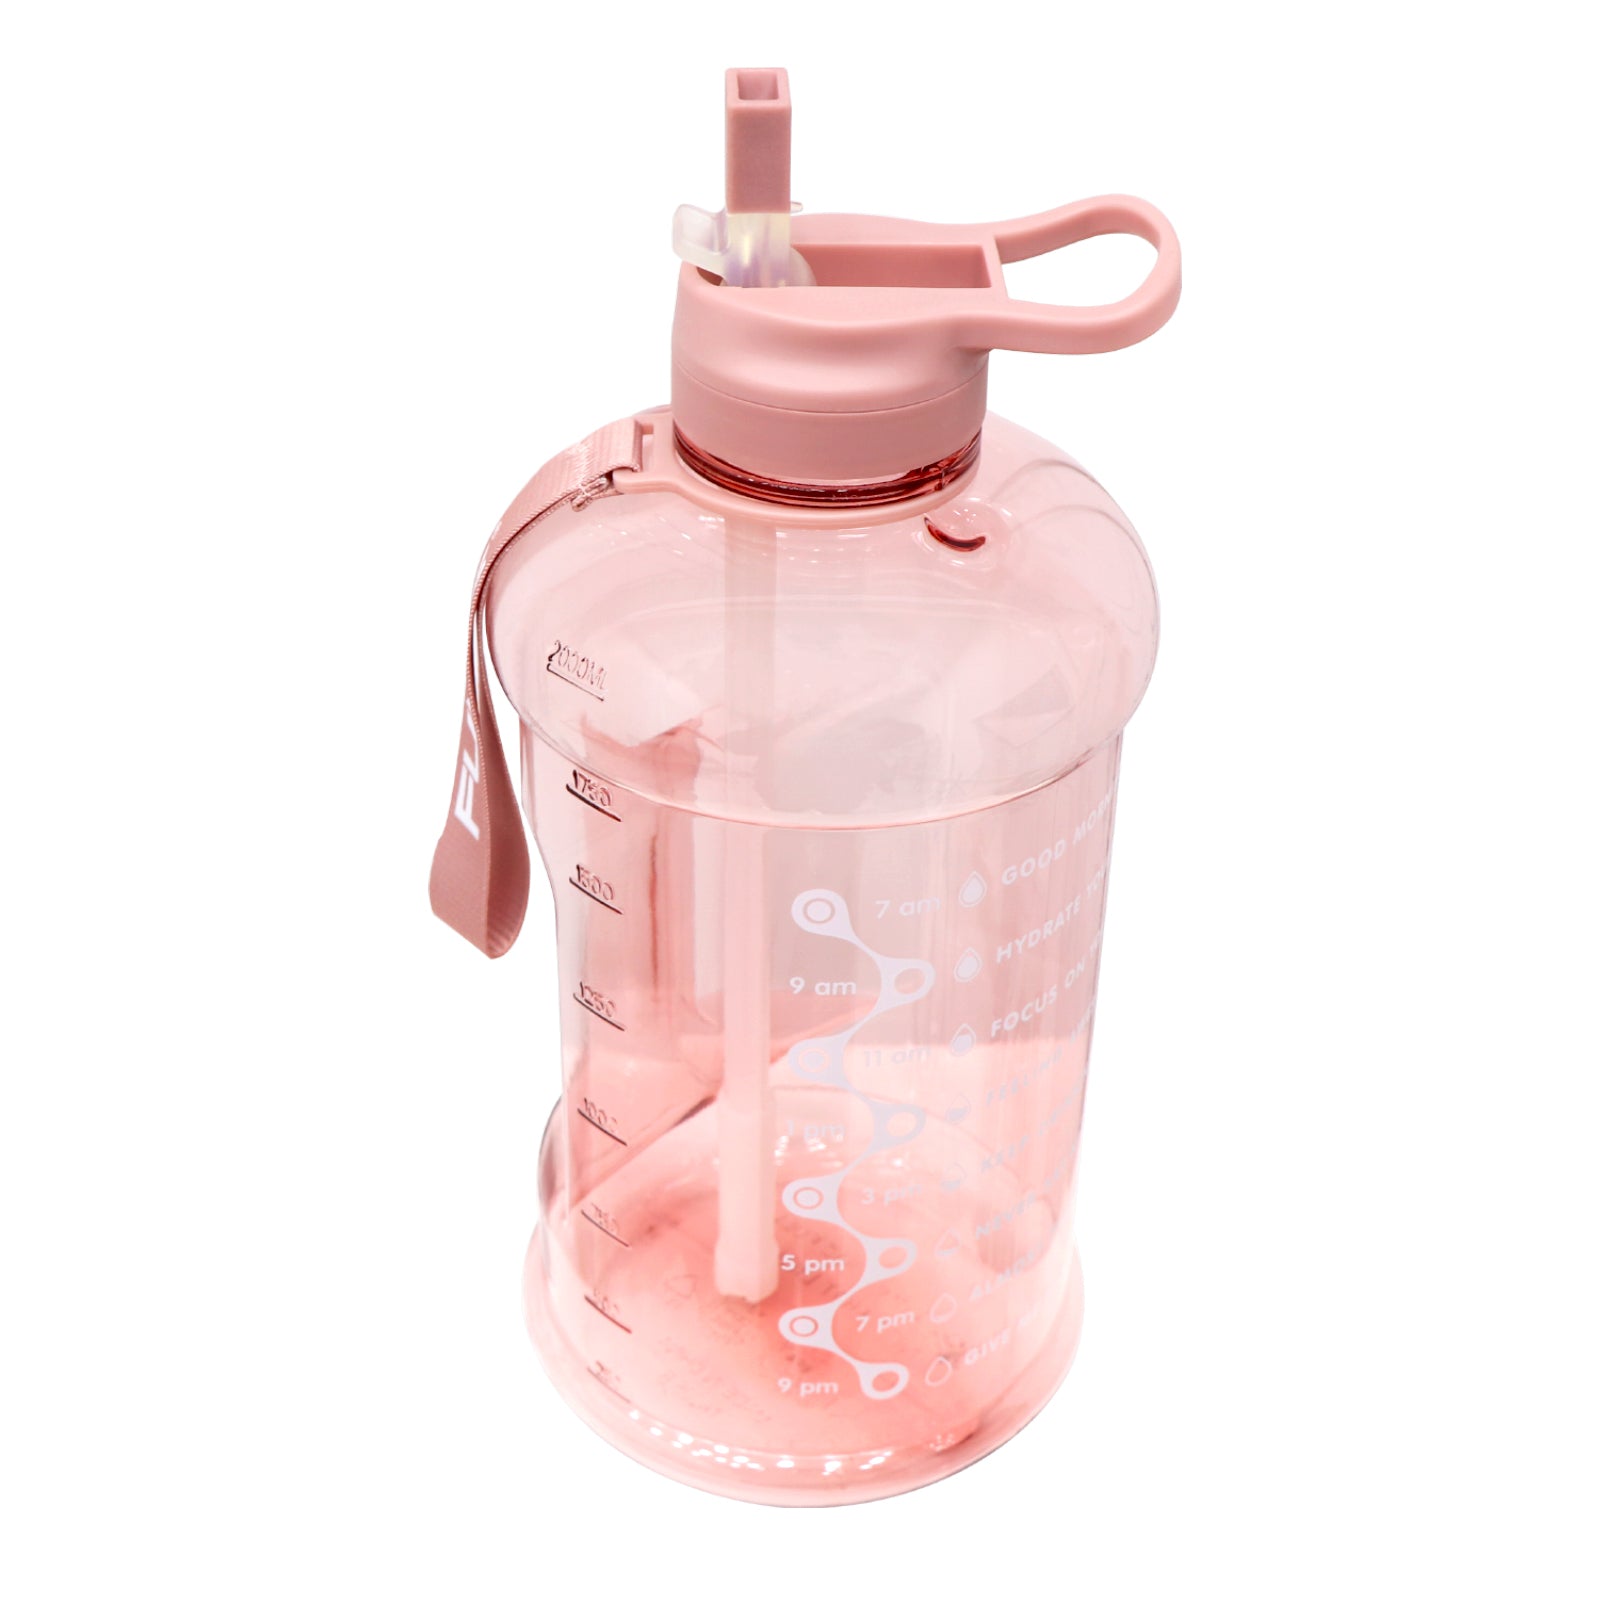 FUNUS Big Water Bottle BPA Free Half Gallon Water Bottle Hydro Jug